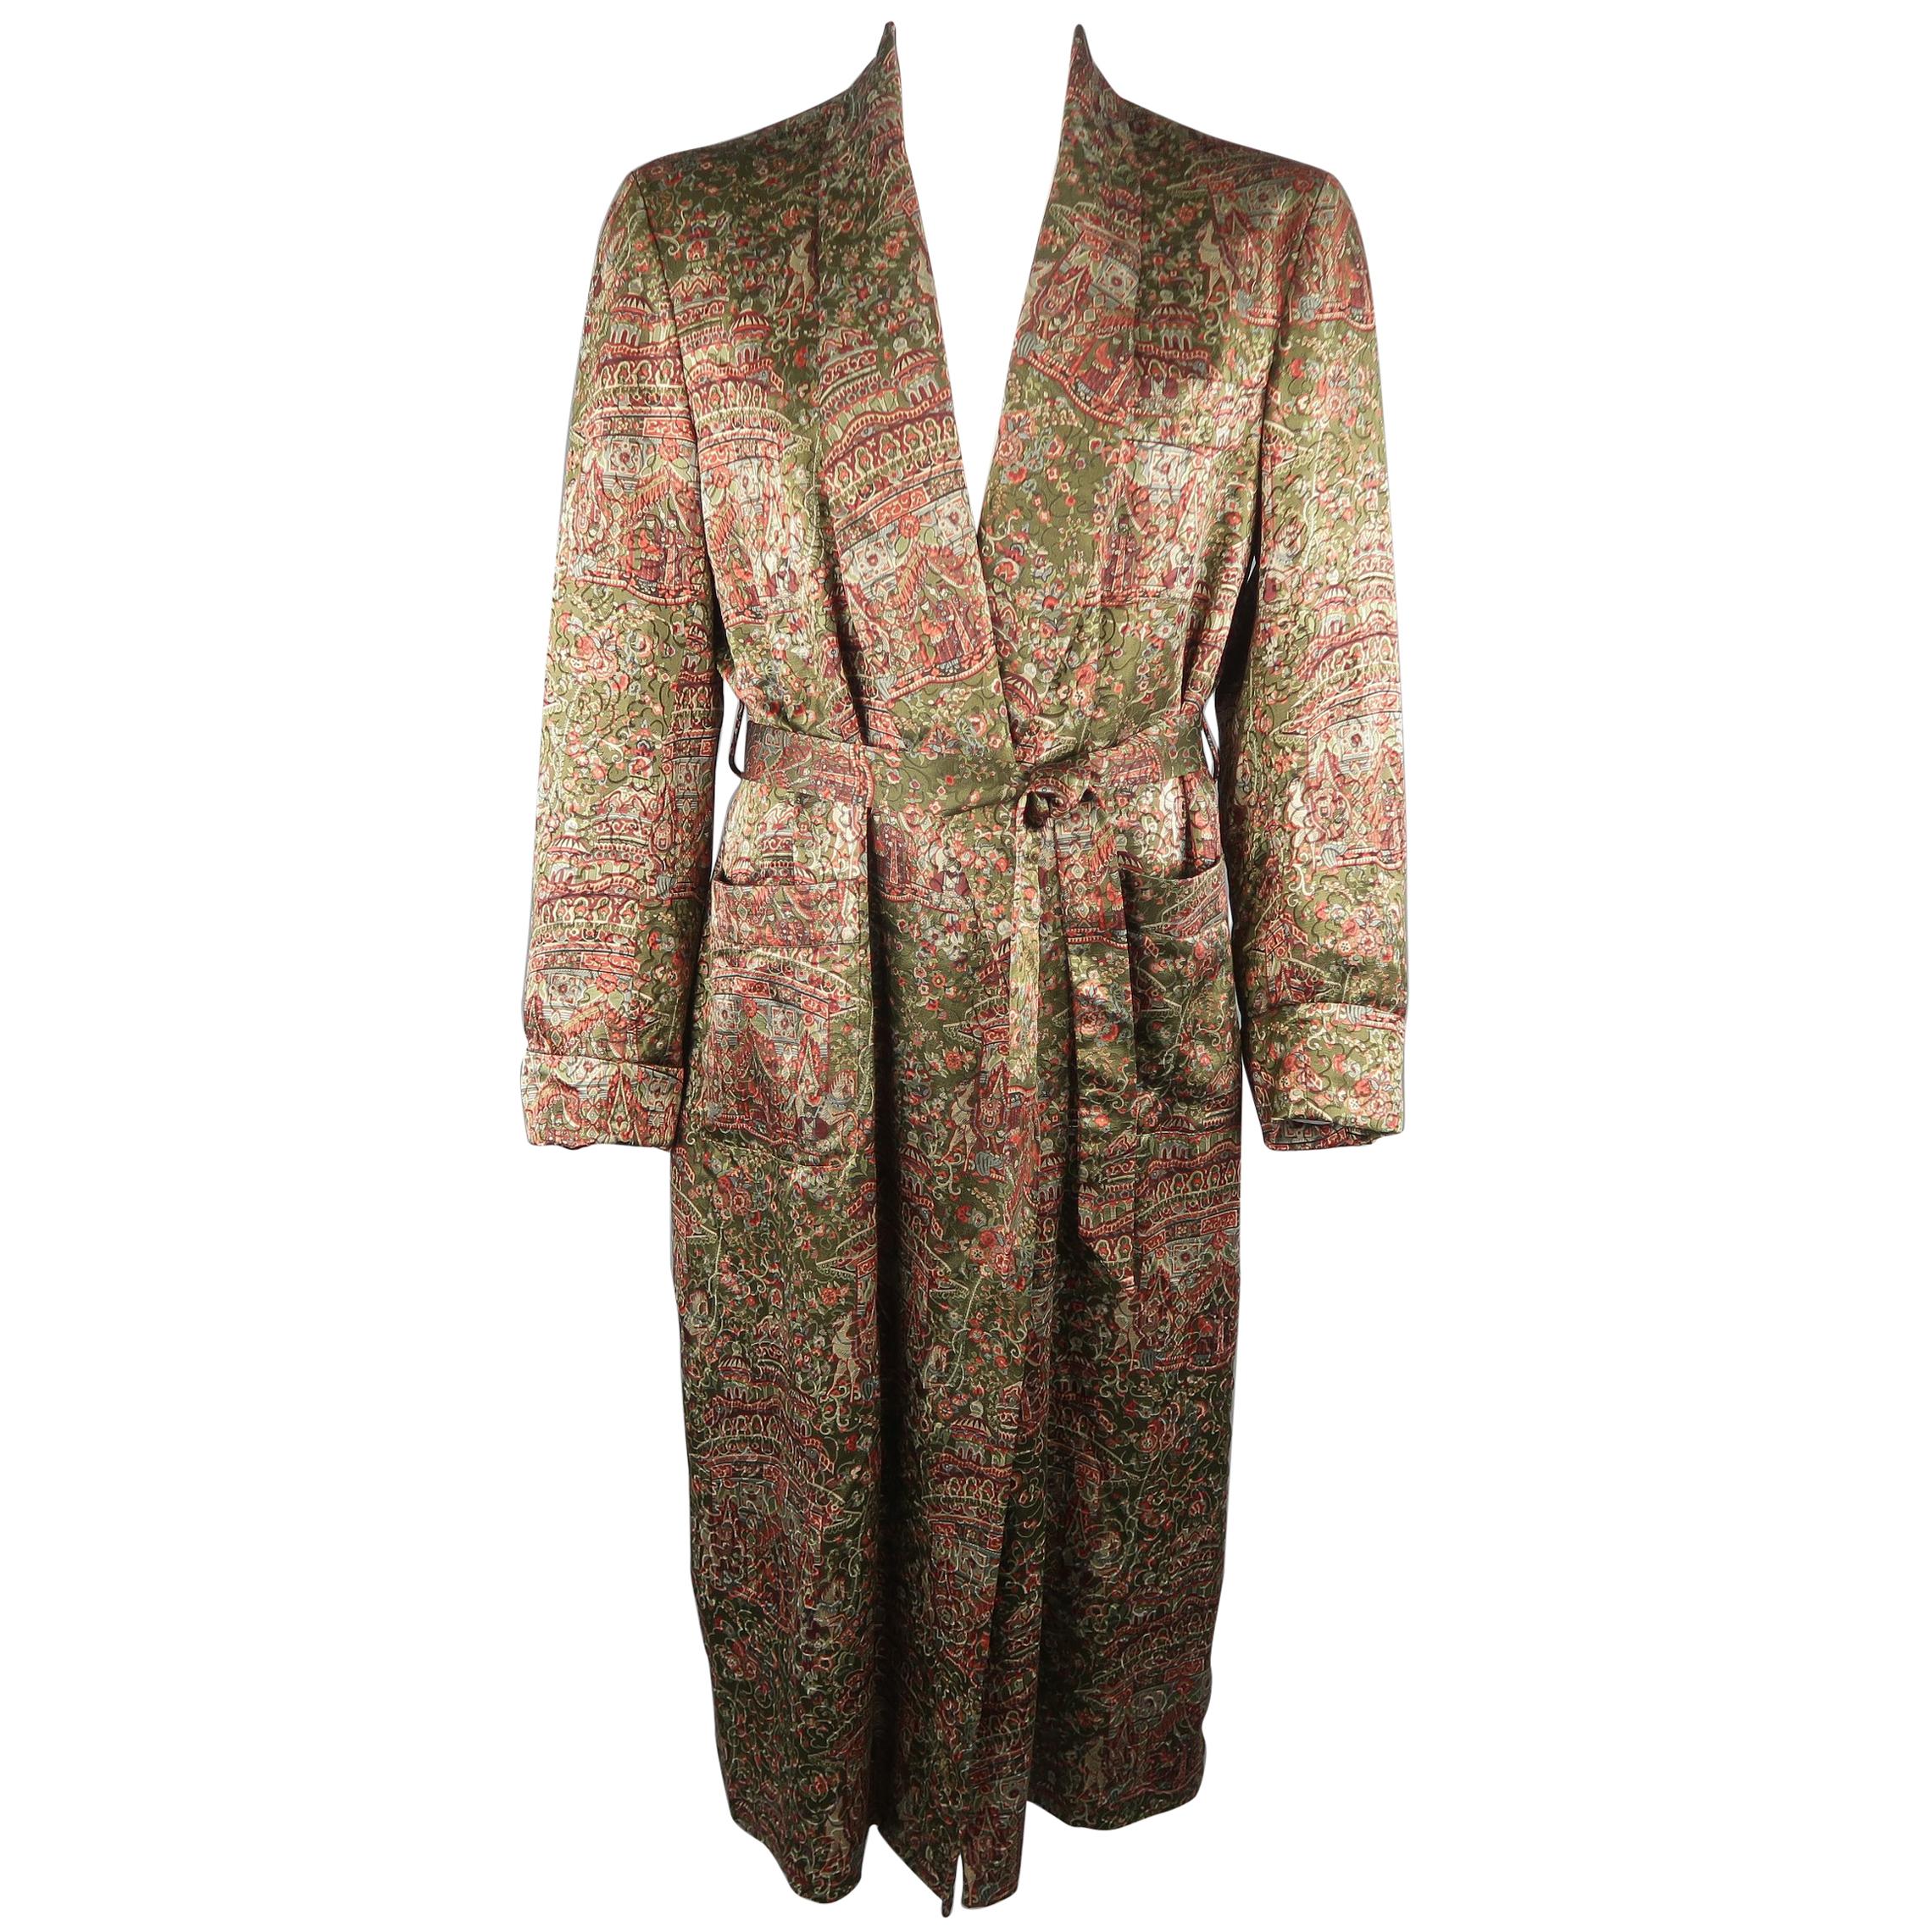 Gucci Robe - For Sale on 1stDibs  gucci bathrobe, gucci mens robe, gucci  robe mens